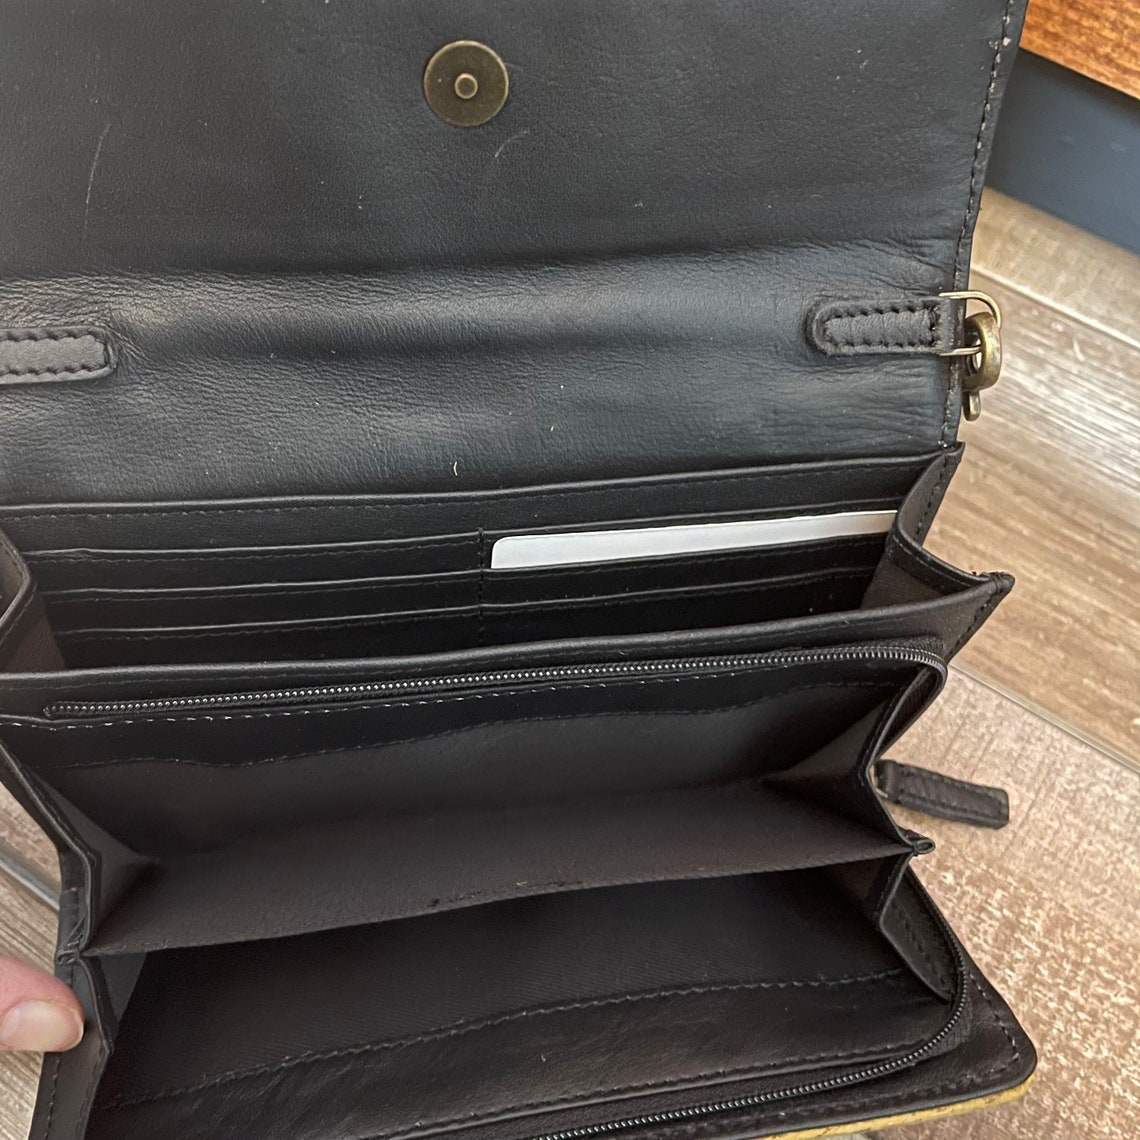 Myra Bag Insights Leather Wallet Crossbody strap distressed | Etsy